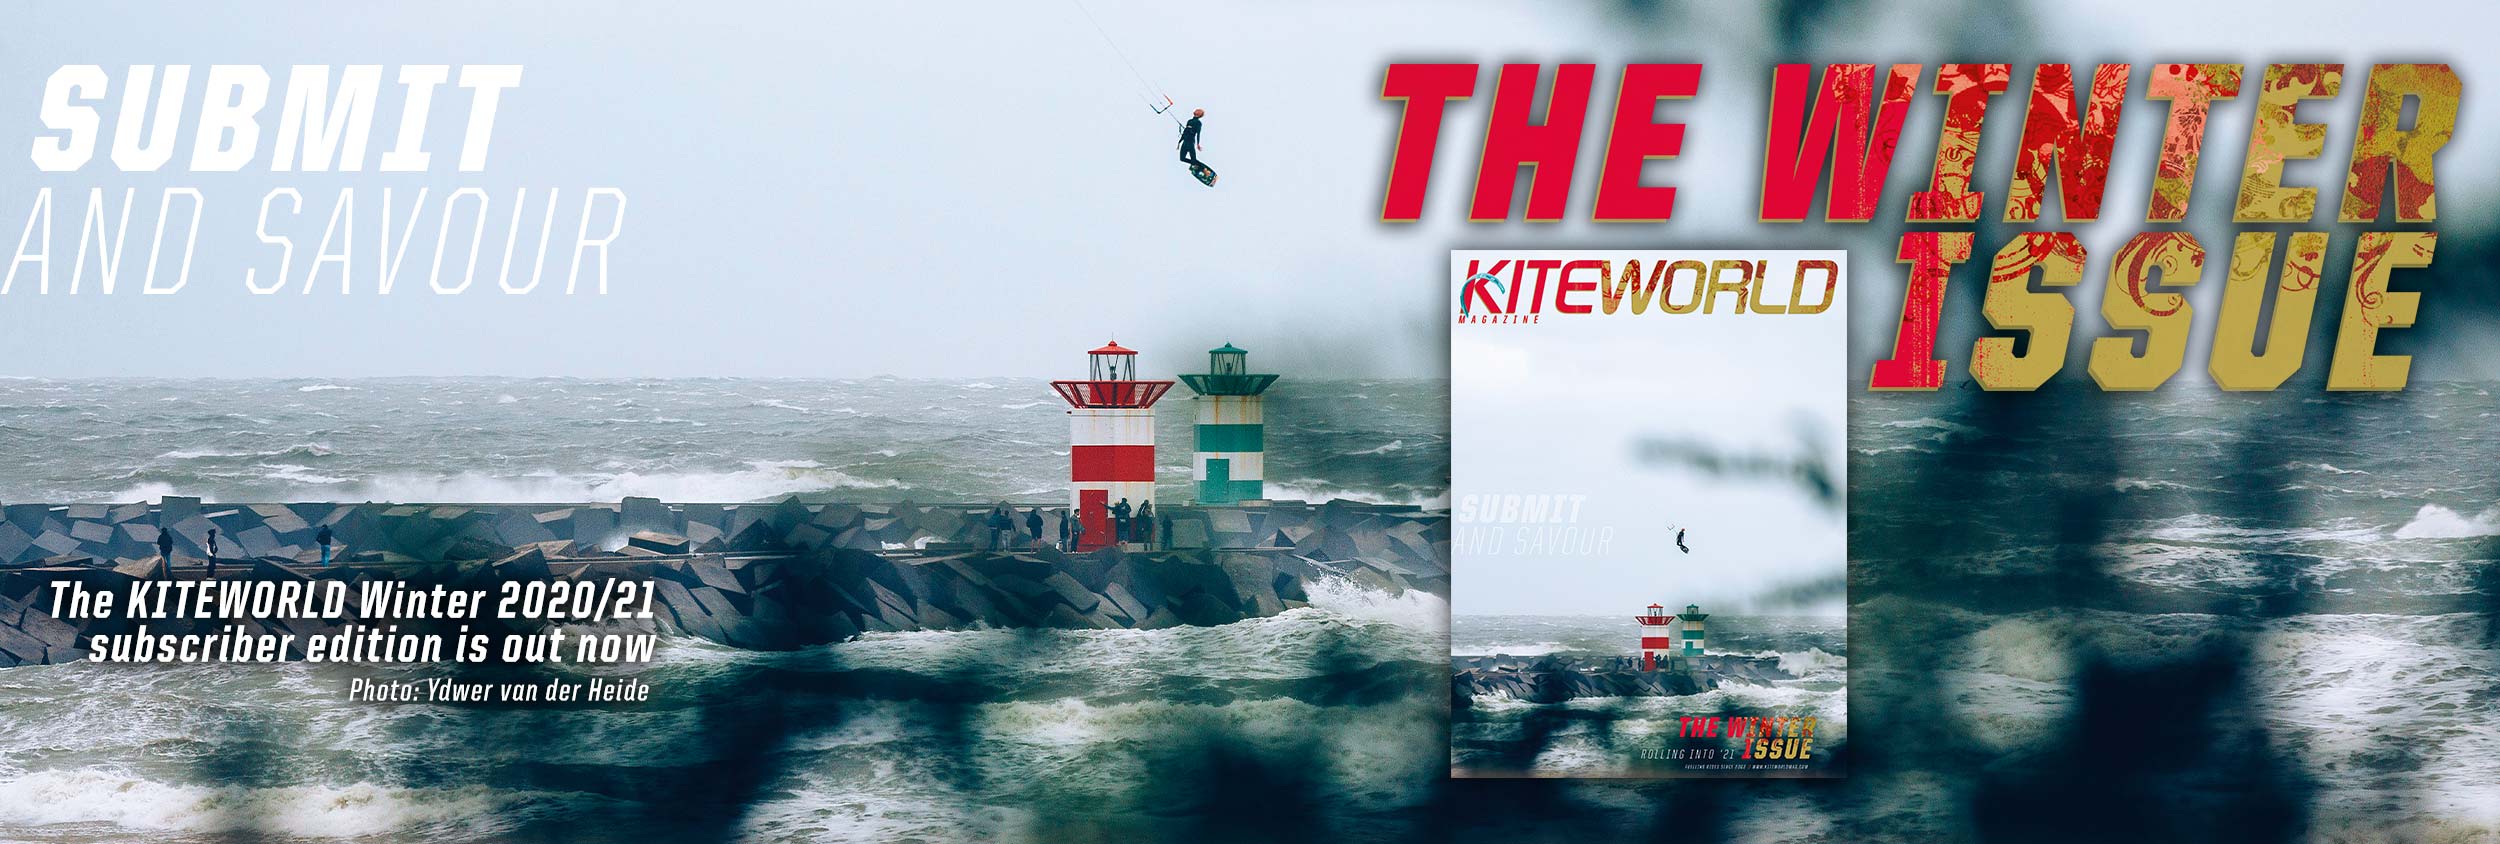 Kiteworld Winter Edition 2020